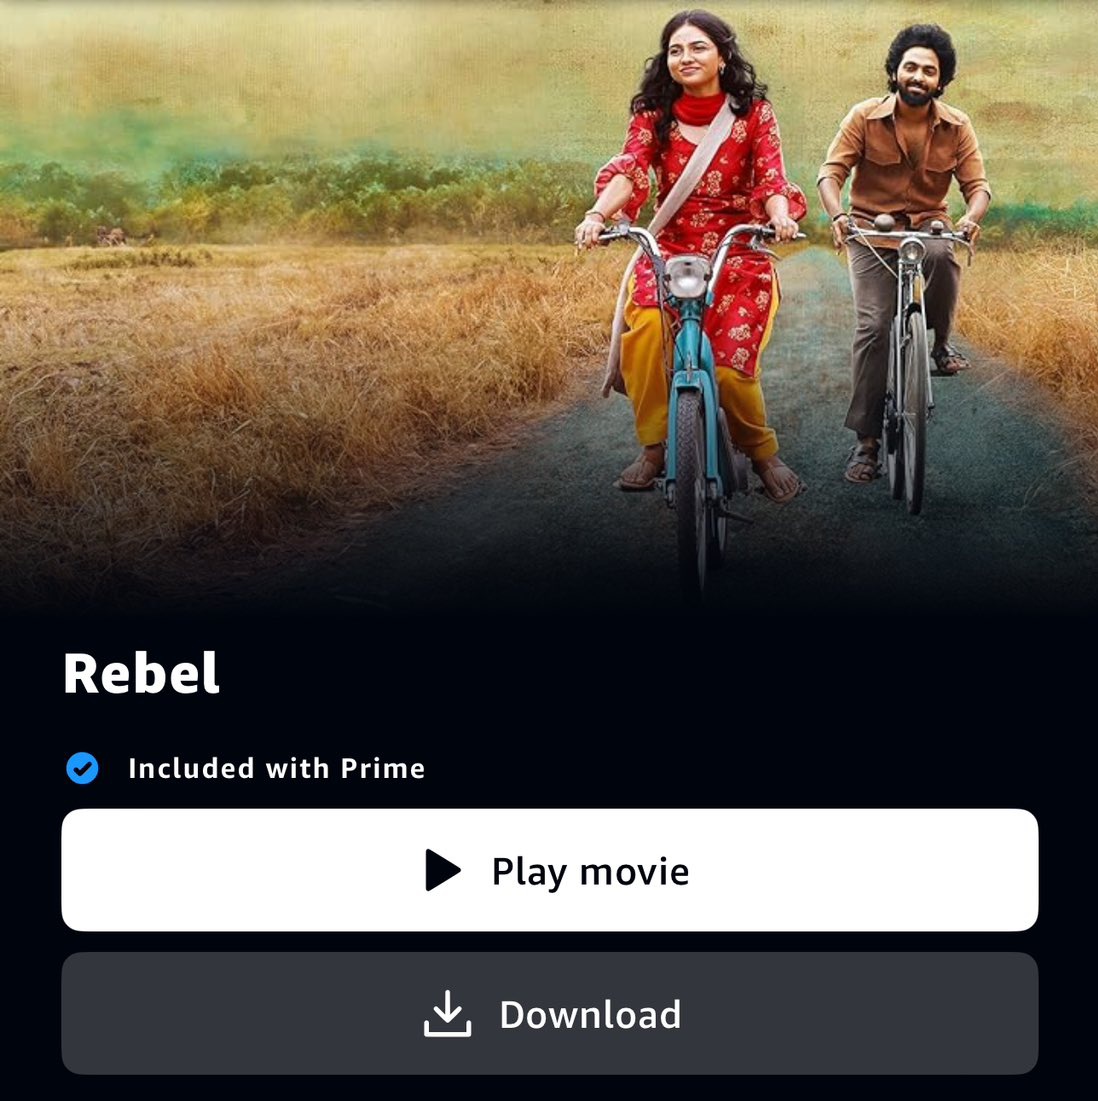 #Rebel Now Streaming on @PrimeVideoIN

Available In:
Tamil | Telugu | Kannada 

#GVPrakash #MamithaBaiju #RebelOnPrime